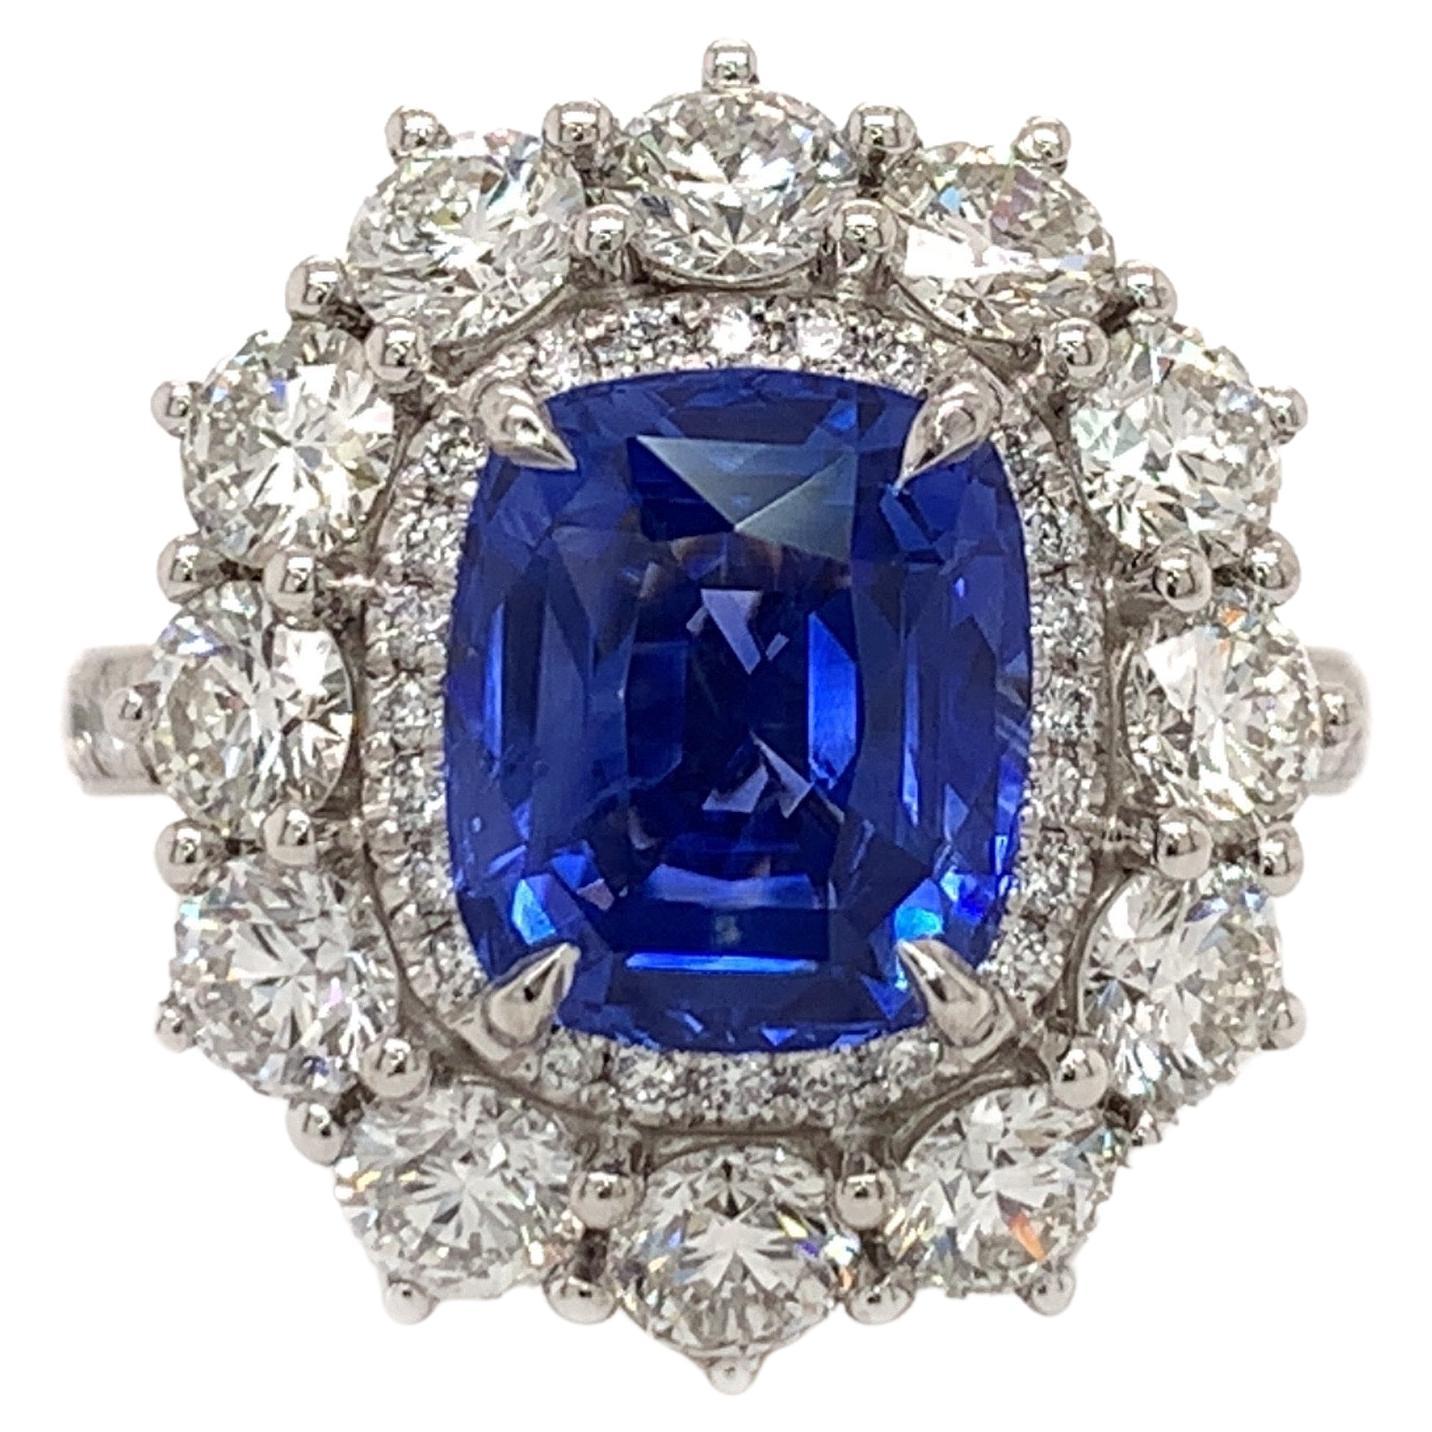 3.53 Carat Sapphire Diamond Ring For Sale